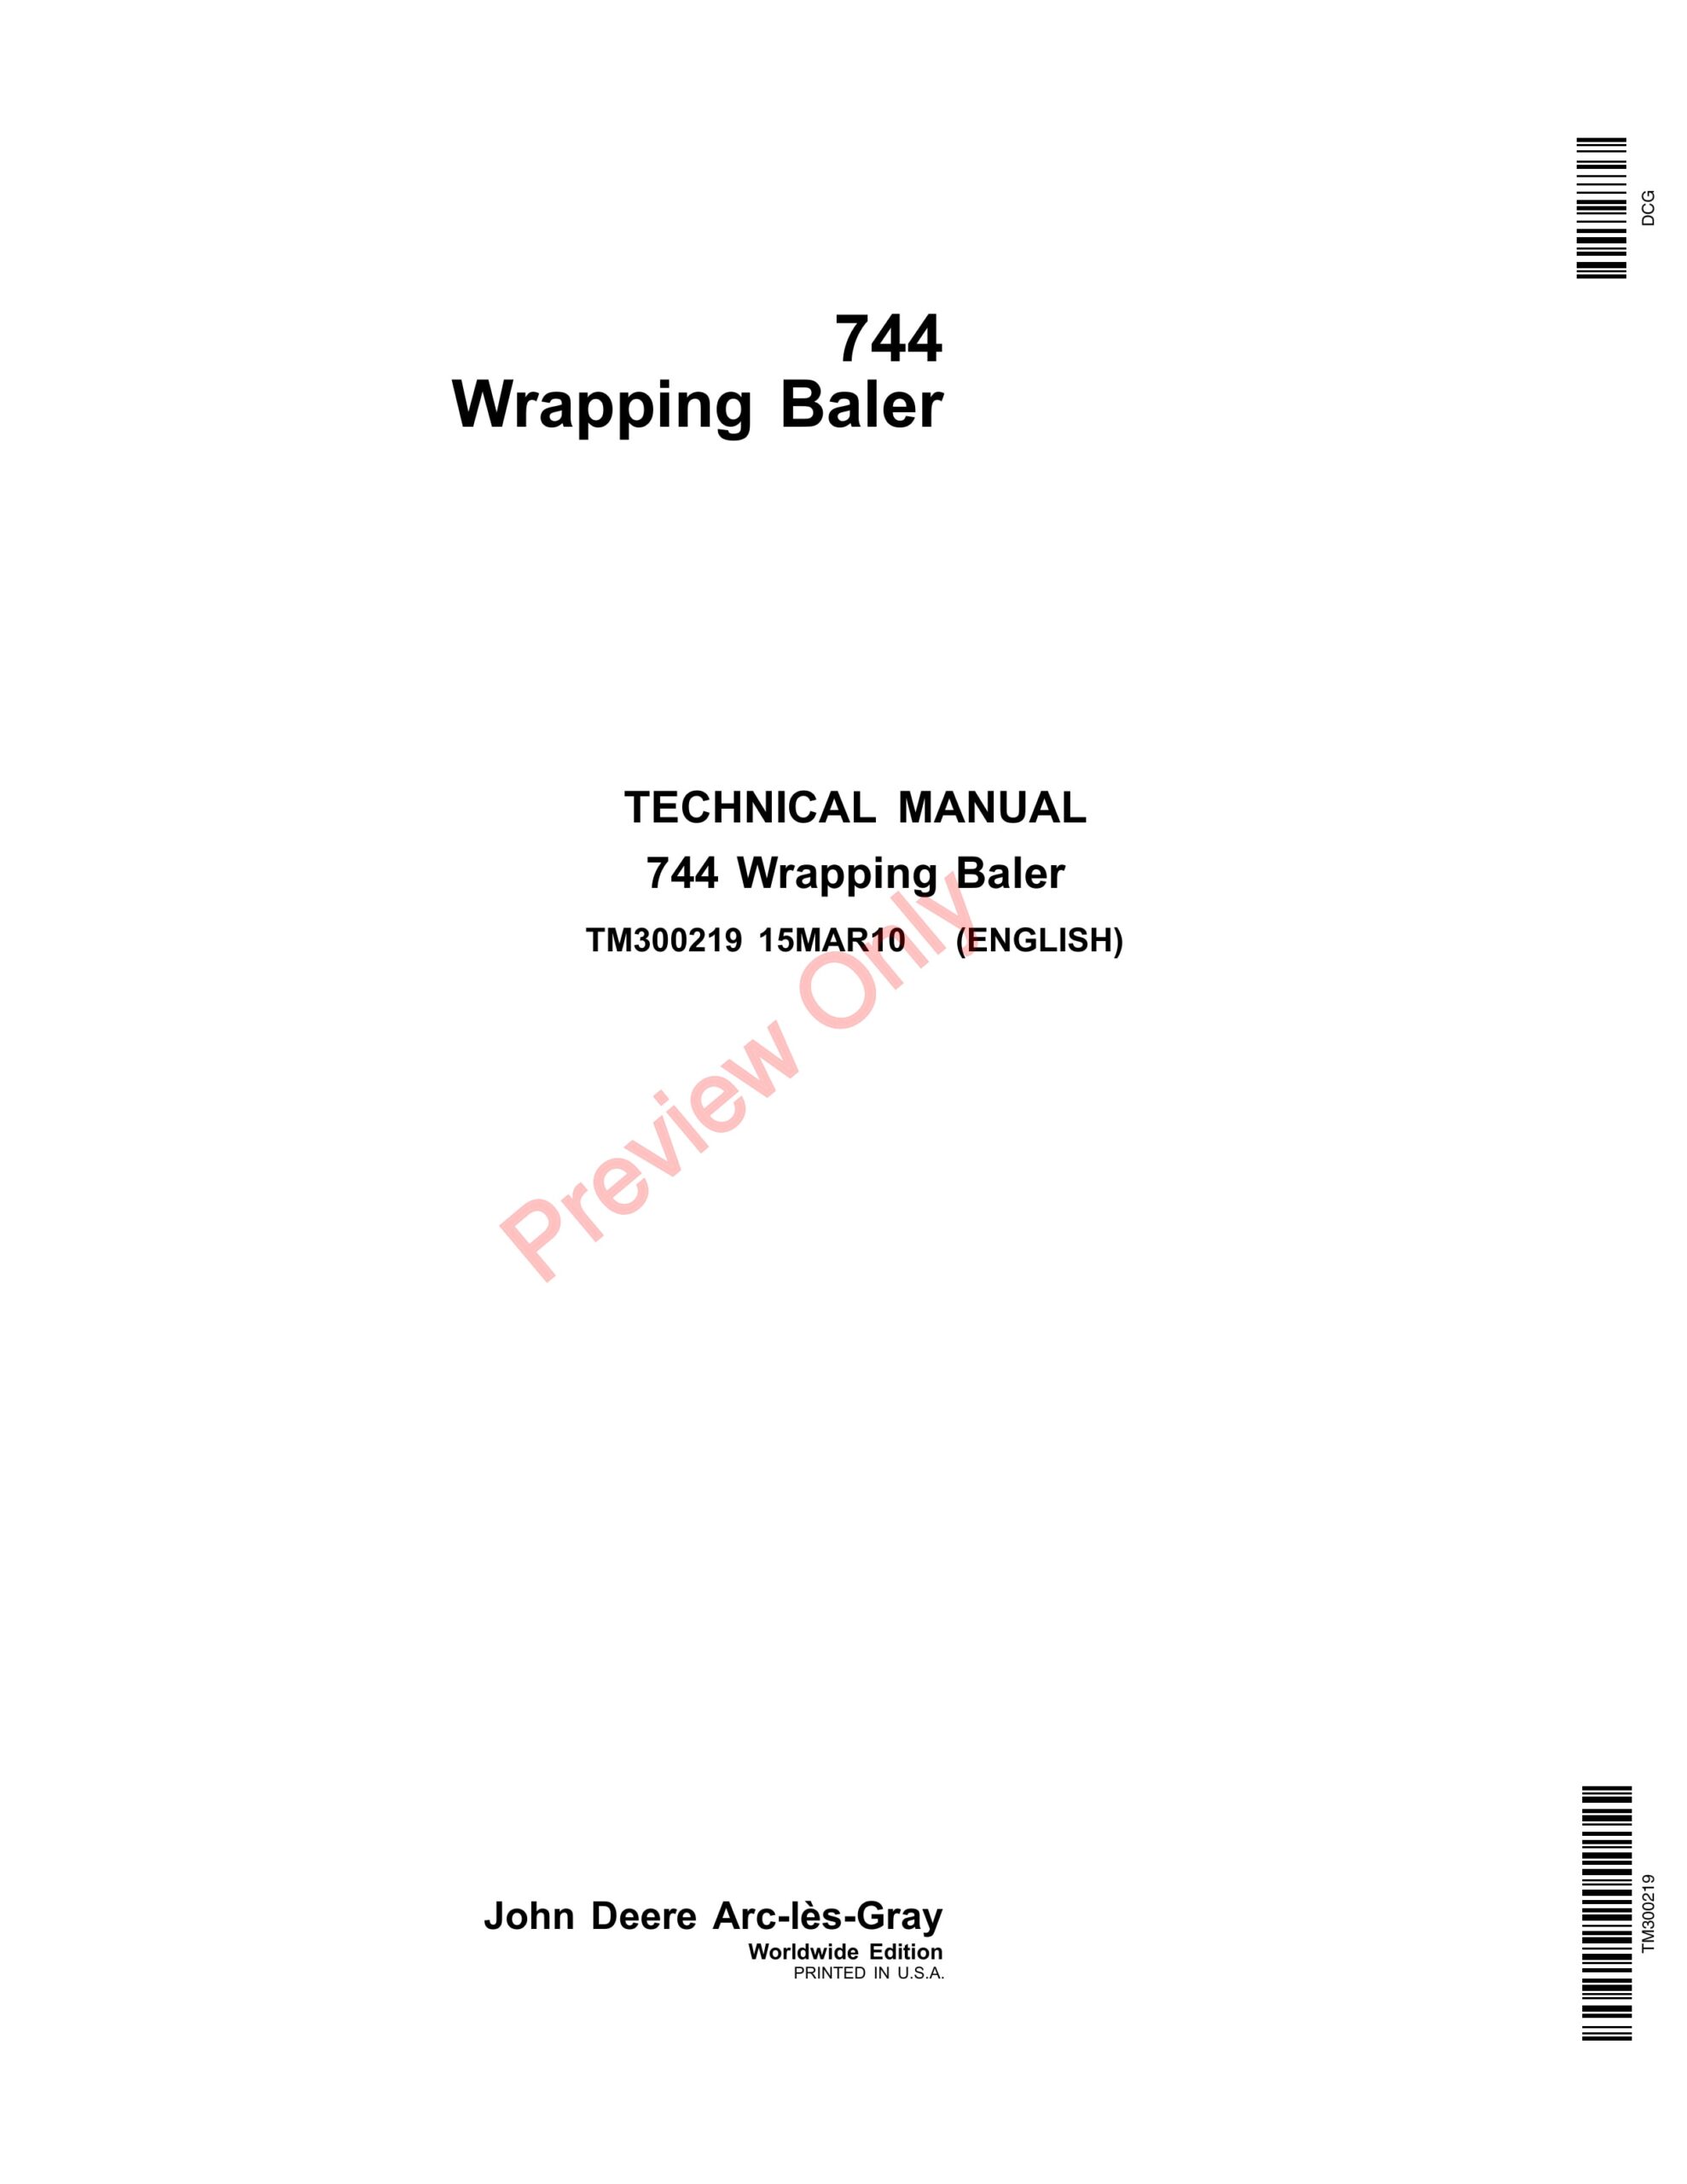 John Deere 744 Wrapping Balers Technical Manual TM300219 40252-1